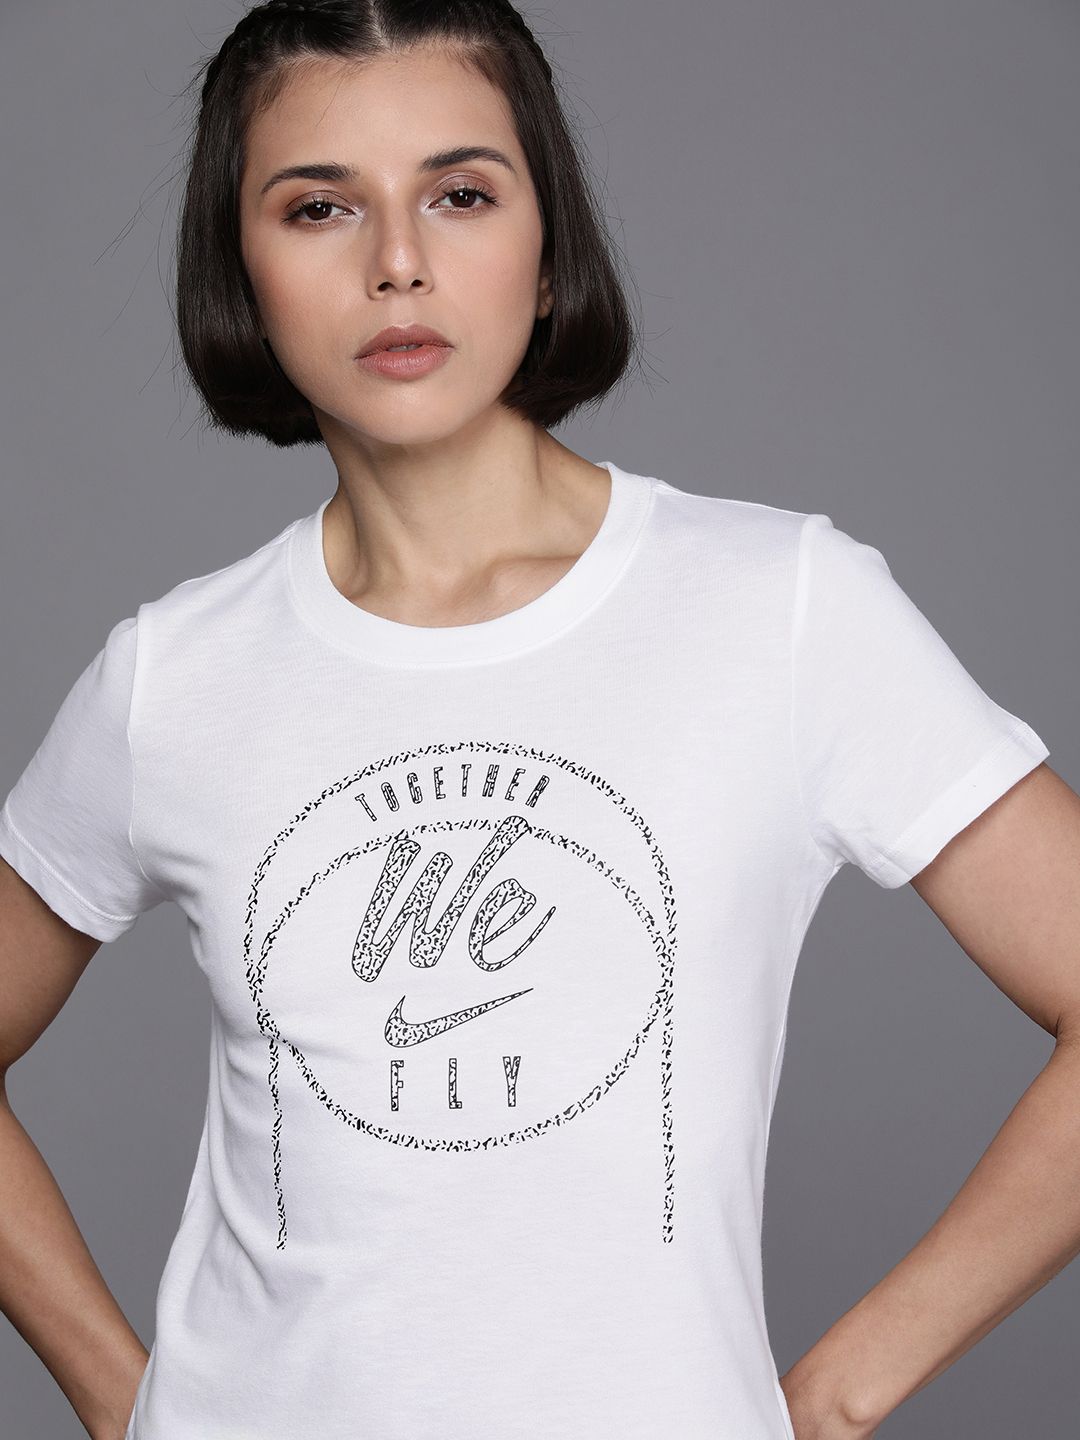 Nike Women White & Black Typography Printed Dri-FIT T-shirt Price in India